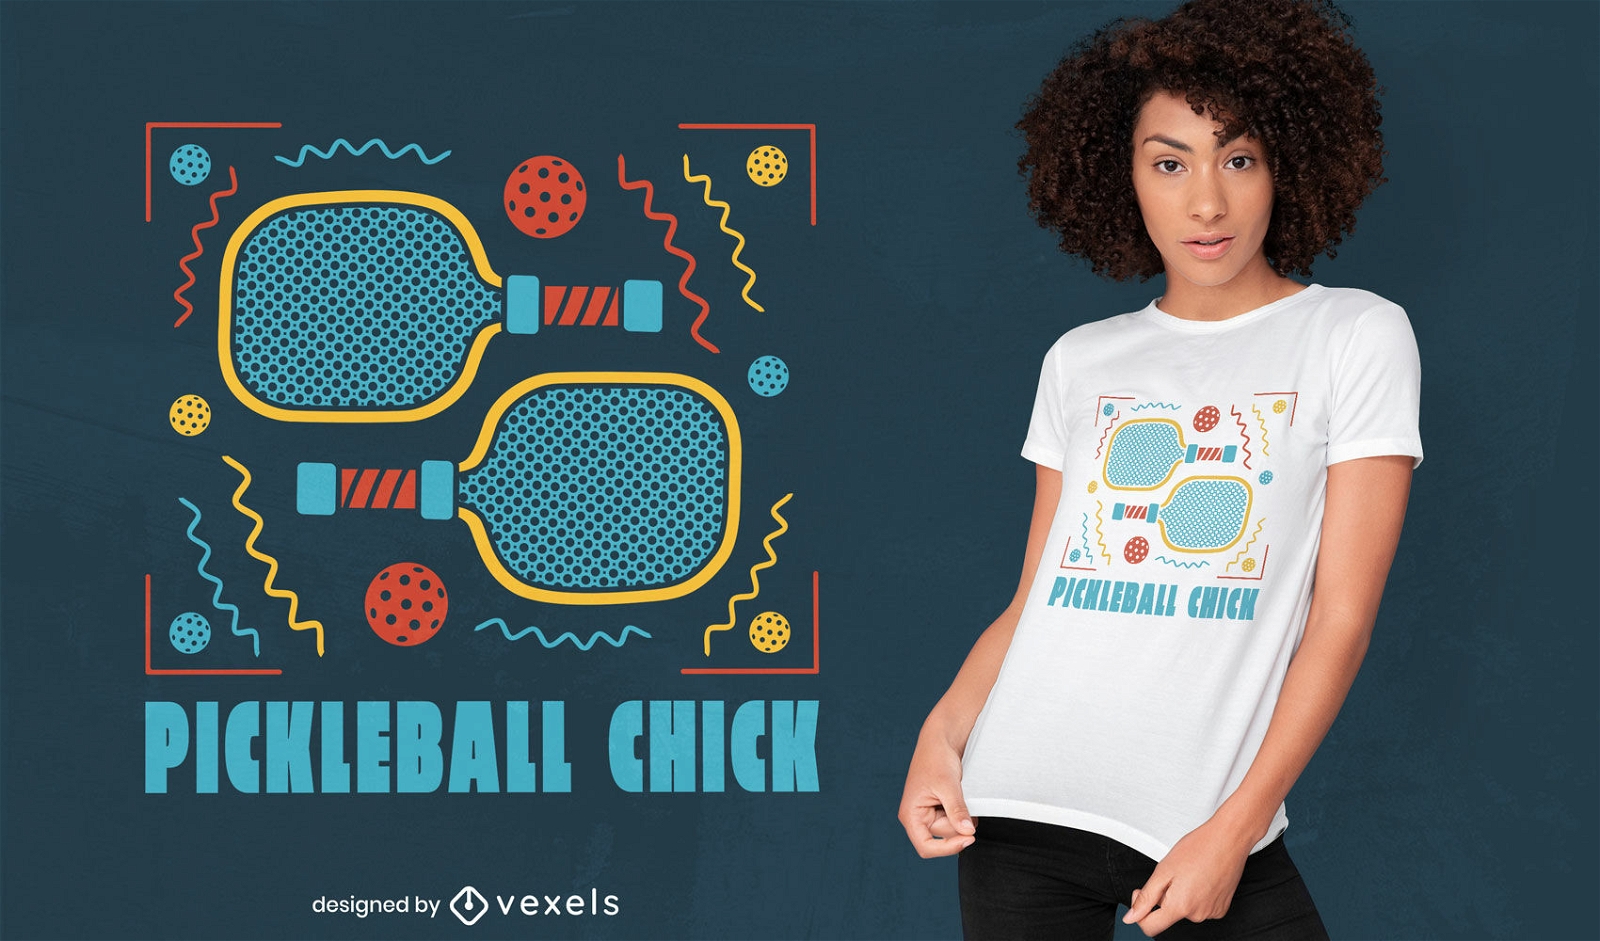 Pickleball chick t-shirt design